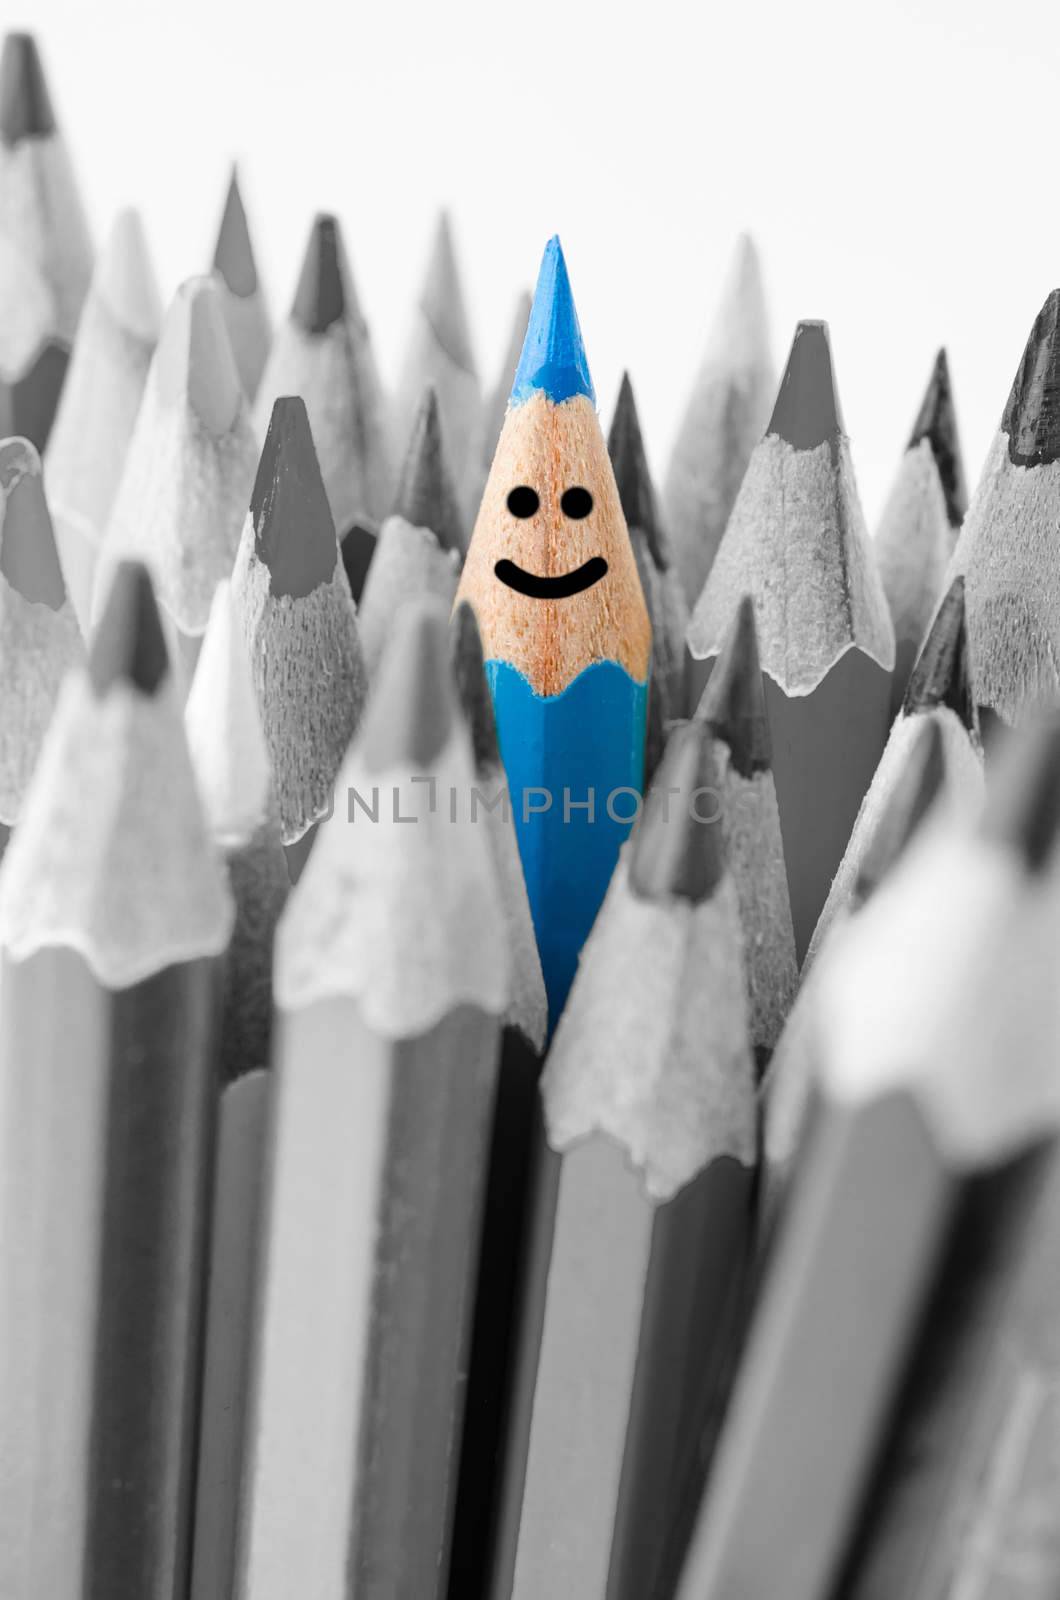 Colouring crayon pencils. Leadership concept. by Gamjai